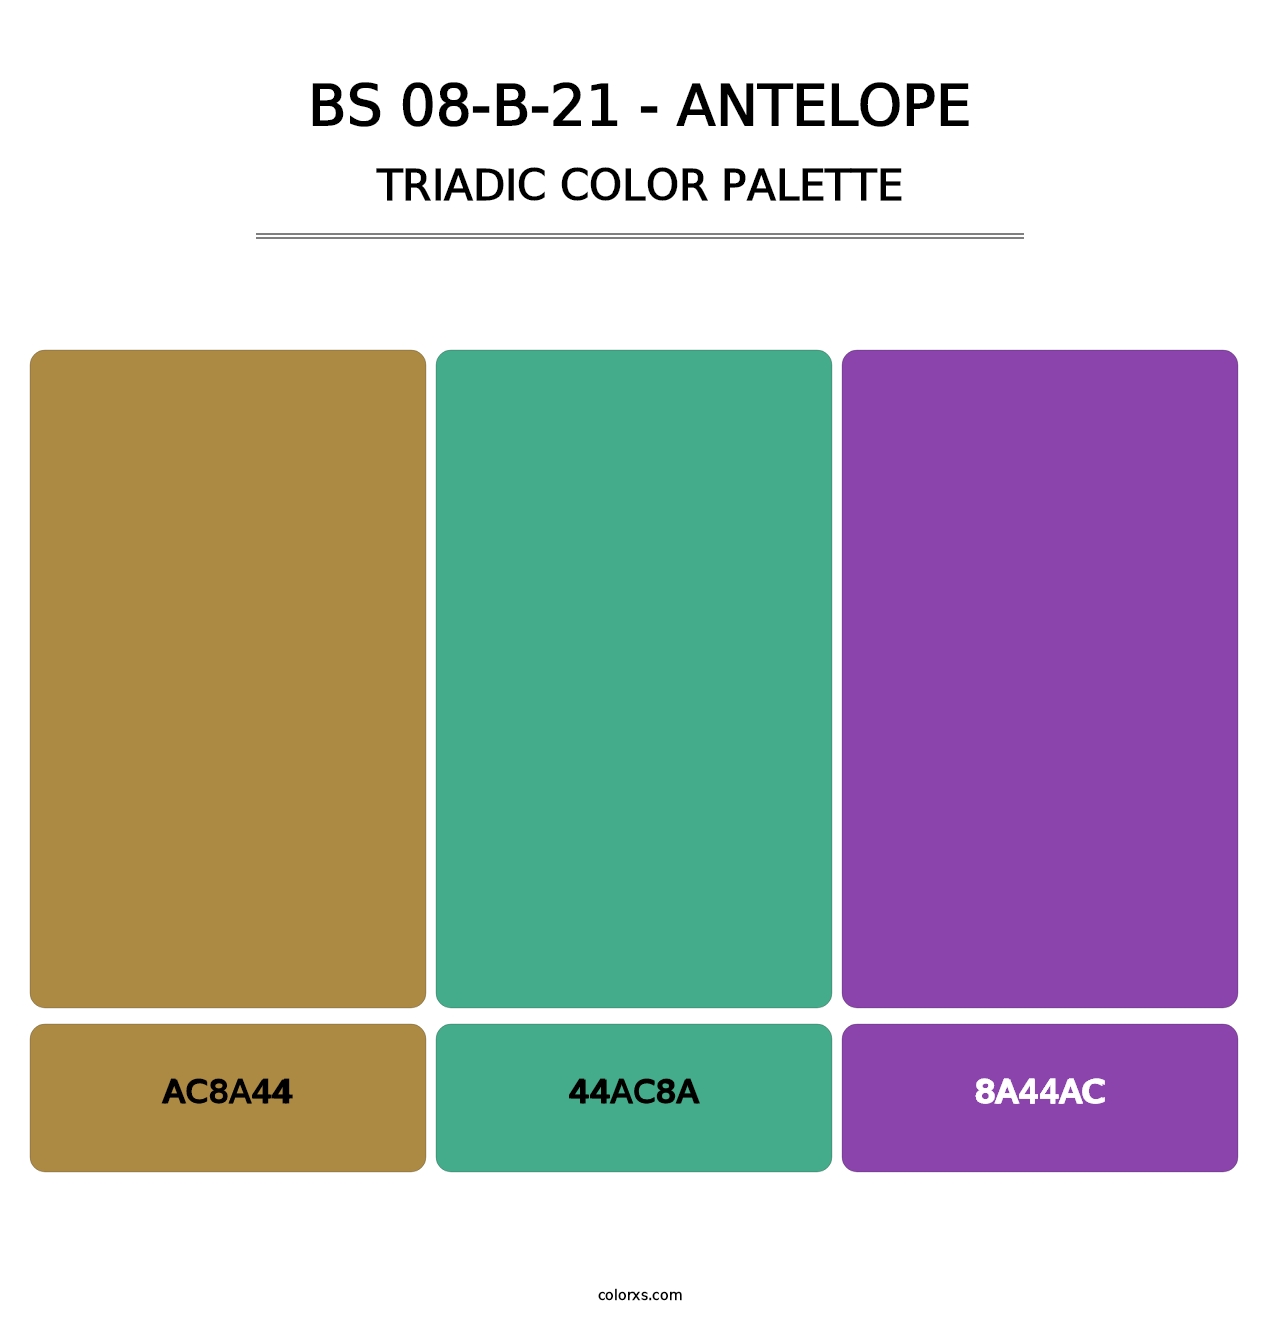 BS 08-B-21 - Antelope - Triadic Color Palette